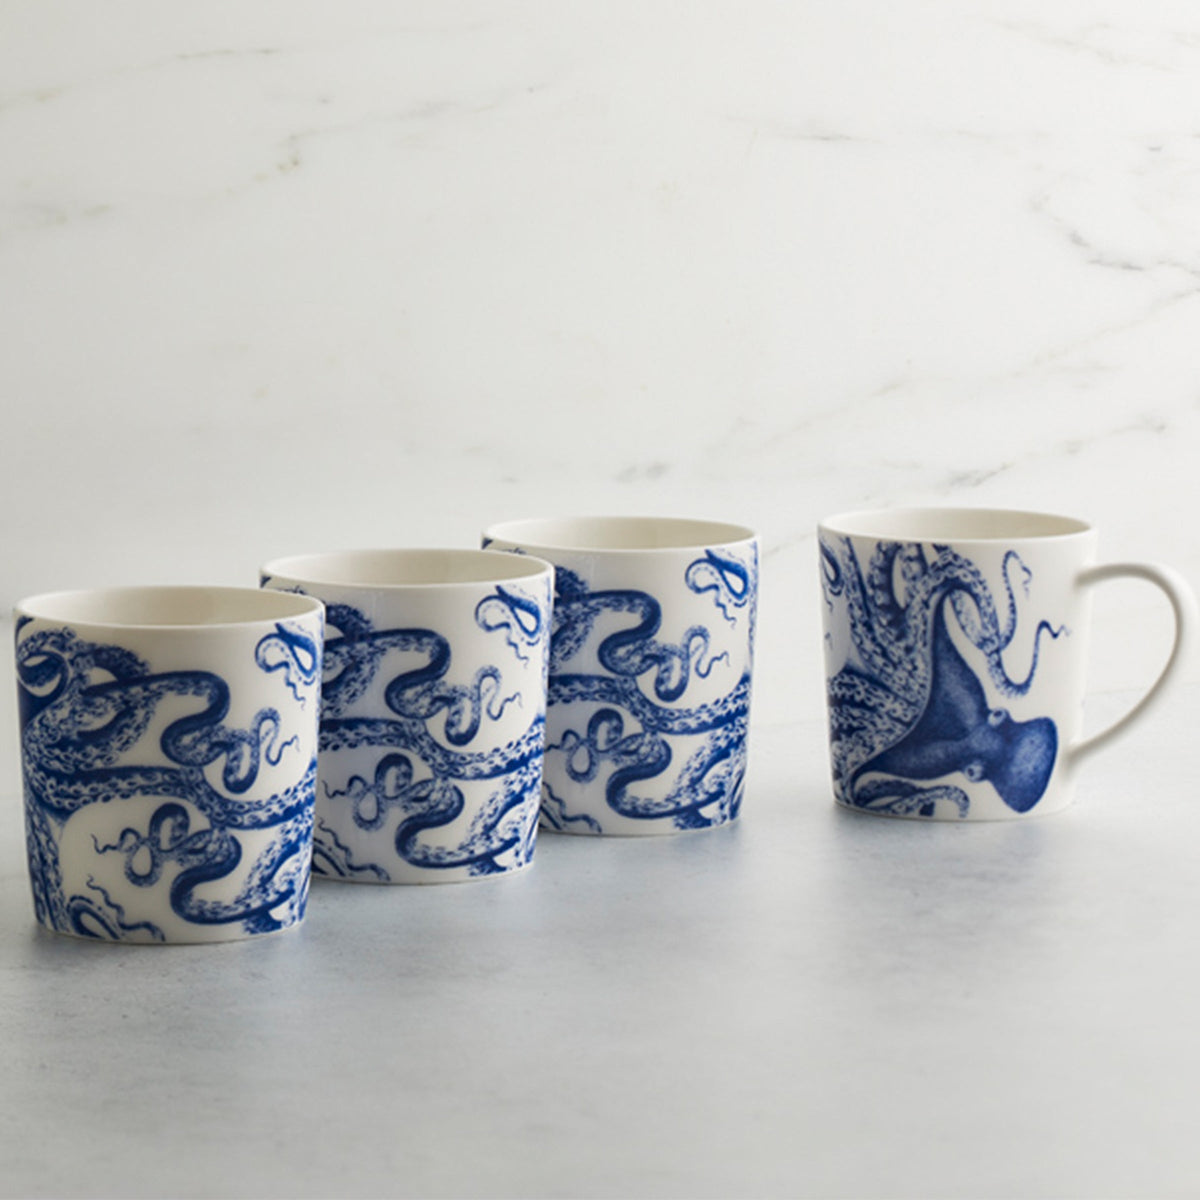 Lucy the octopus-inspired, Caskata Artisanal Home deep sea blue and white oversized mug set of 4.